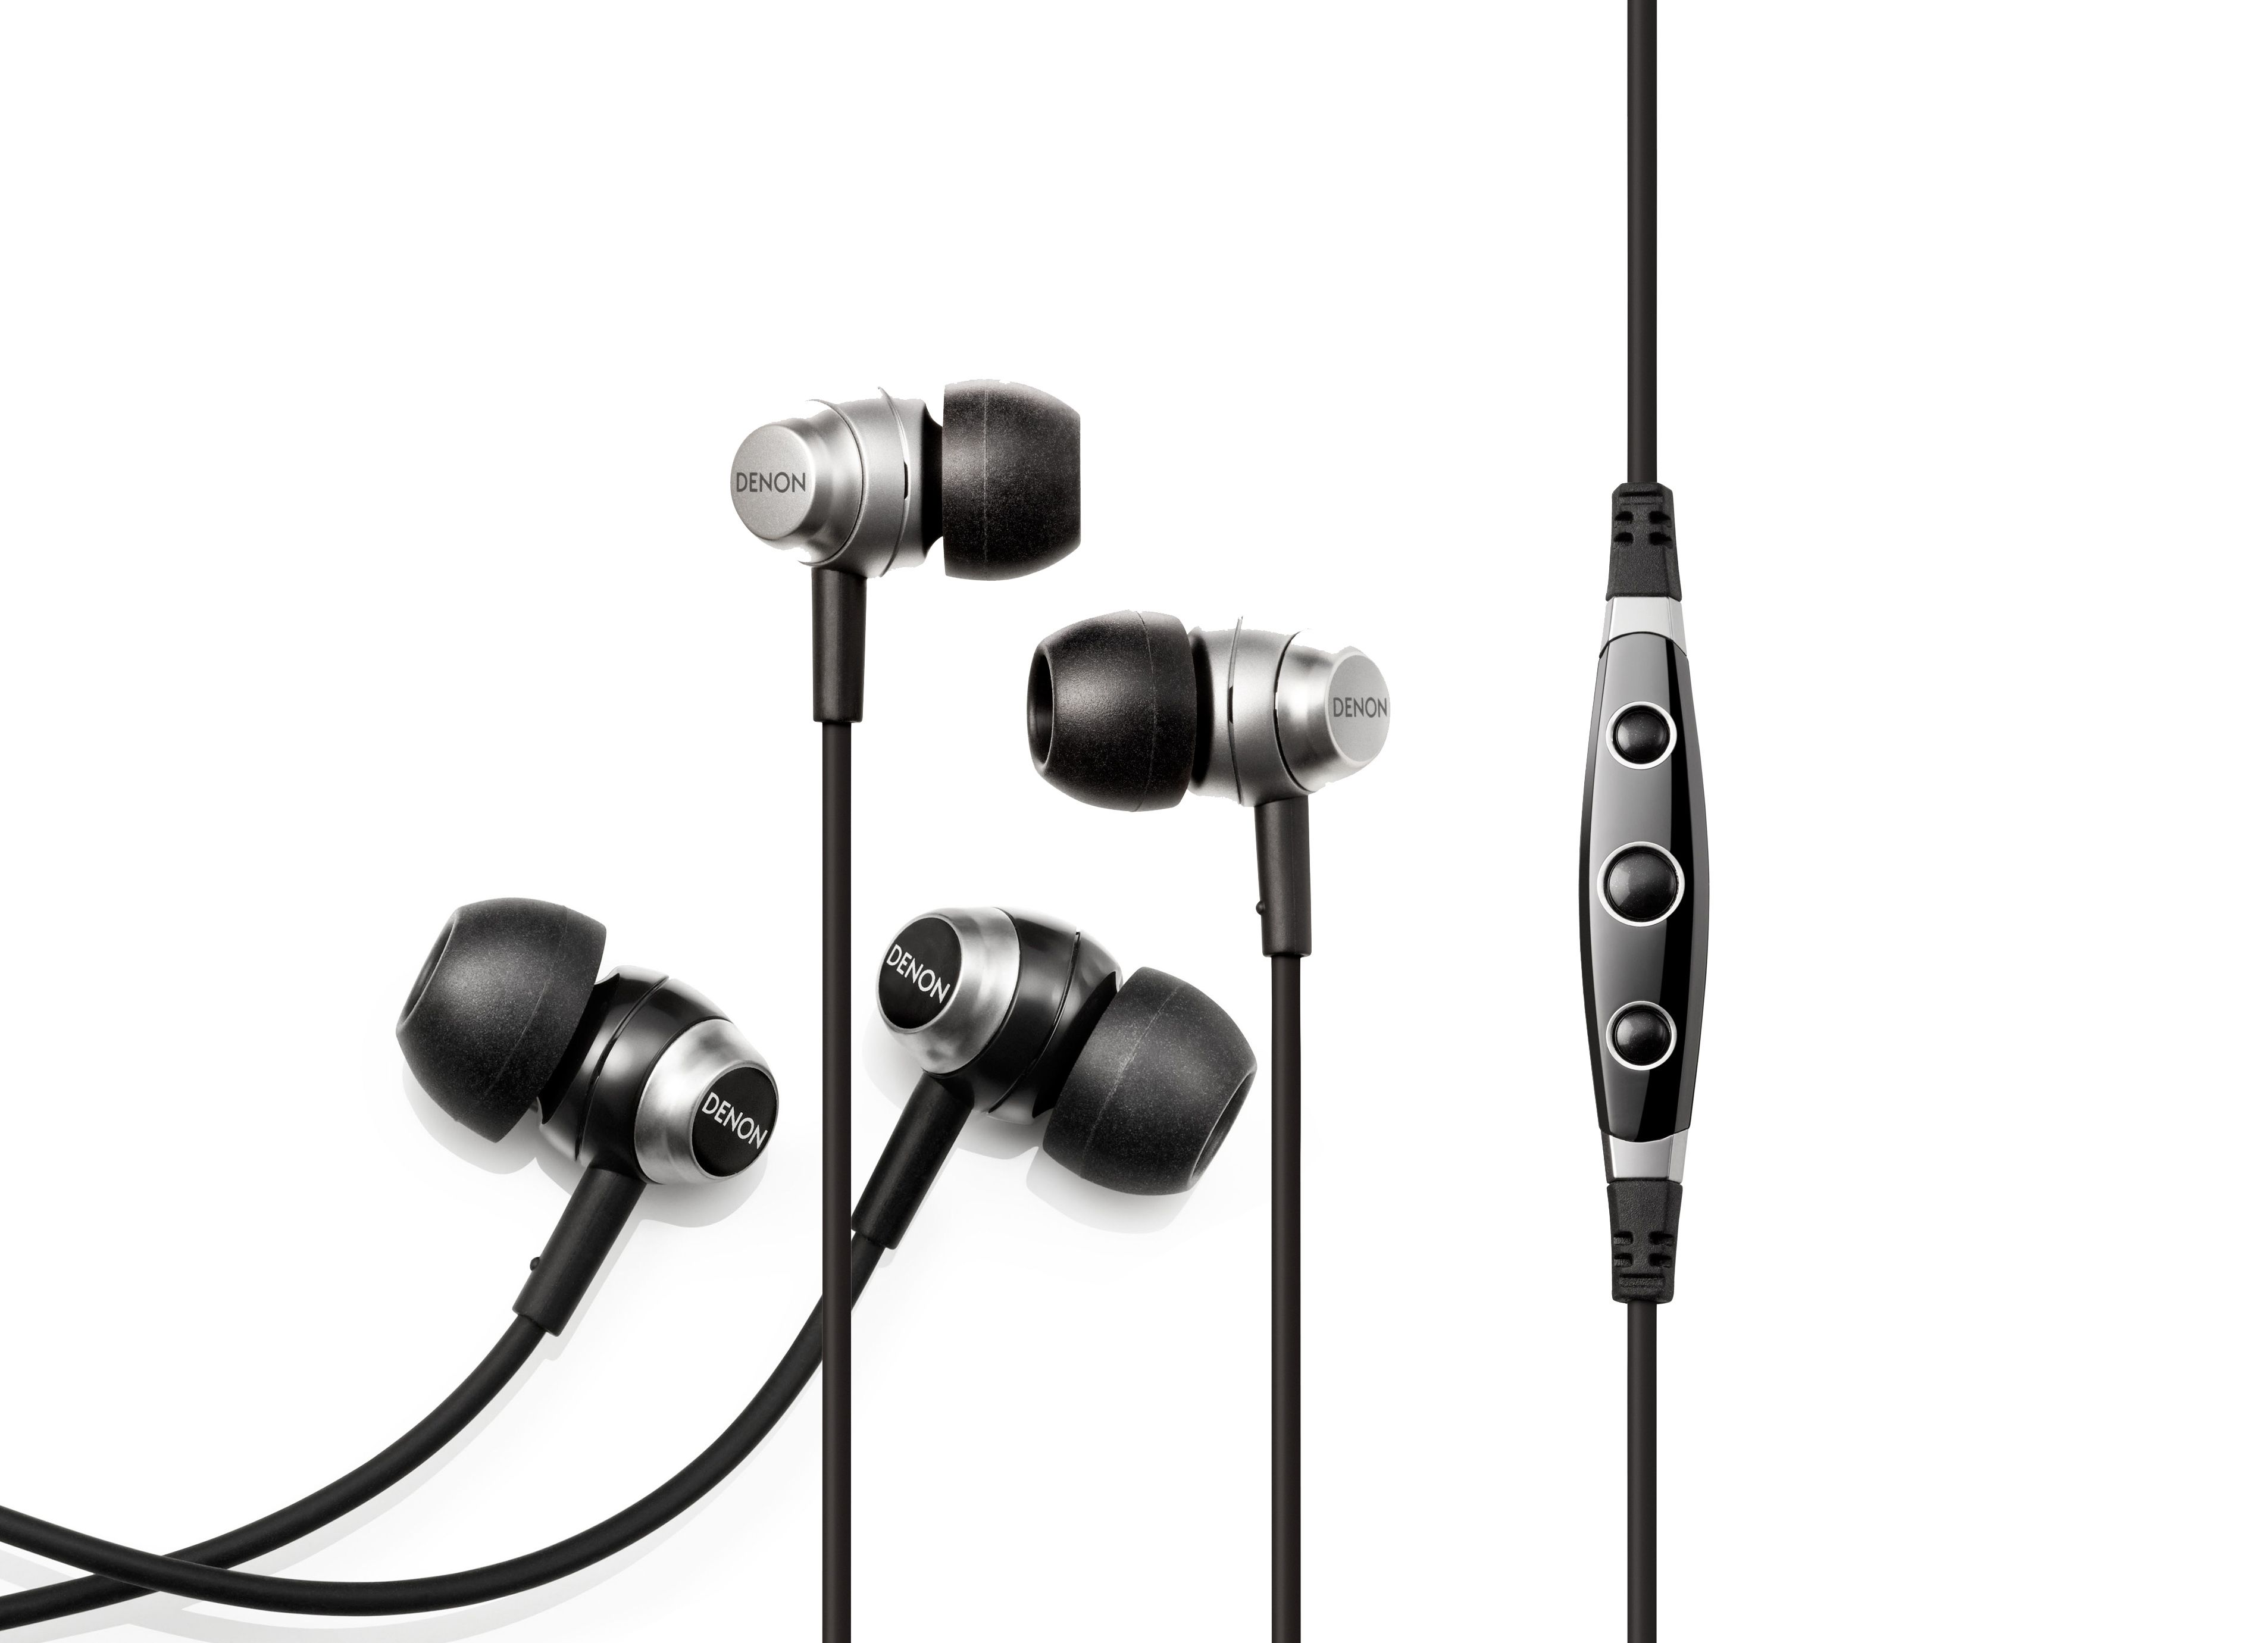 denon s music mania series adds ah c120 and ah c50 in ear headphones image 1